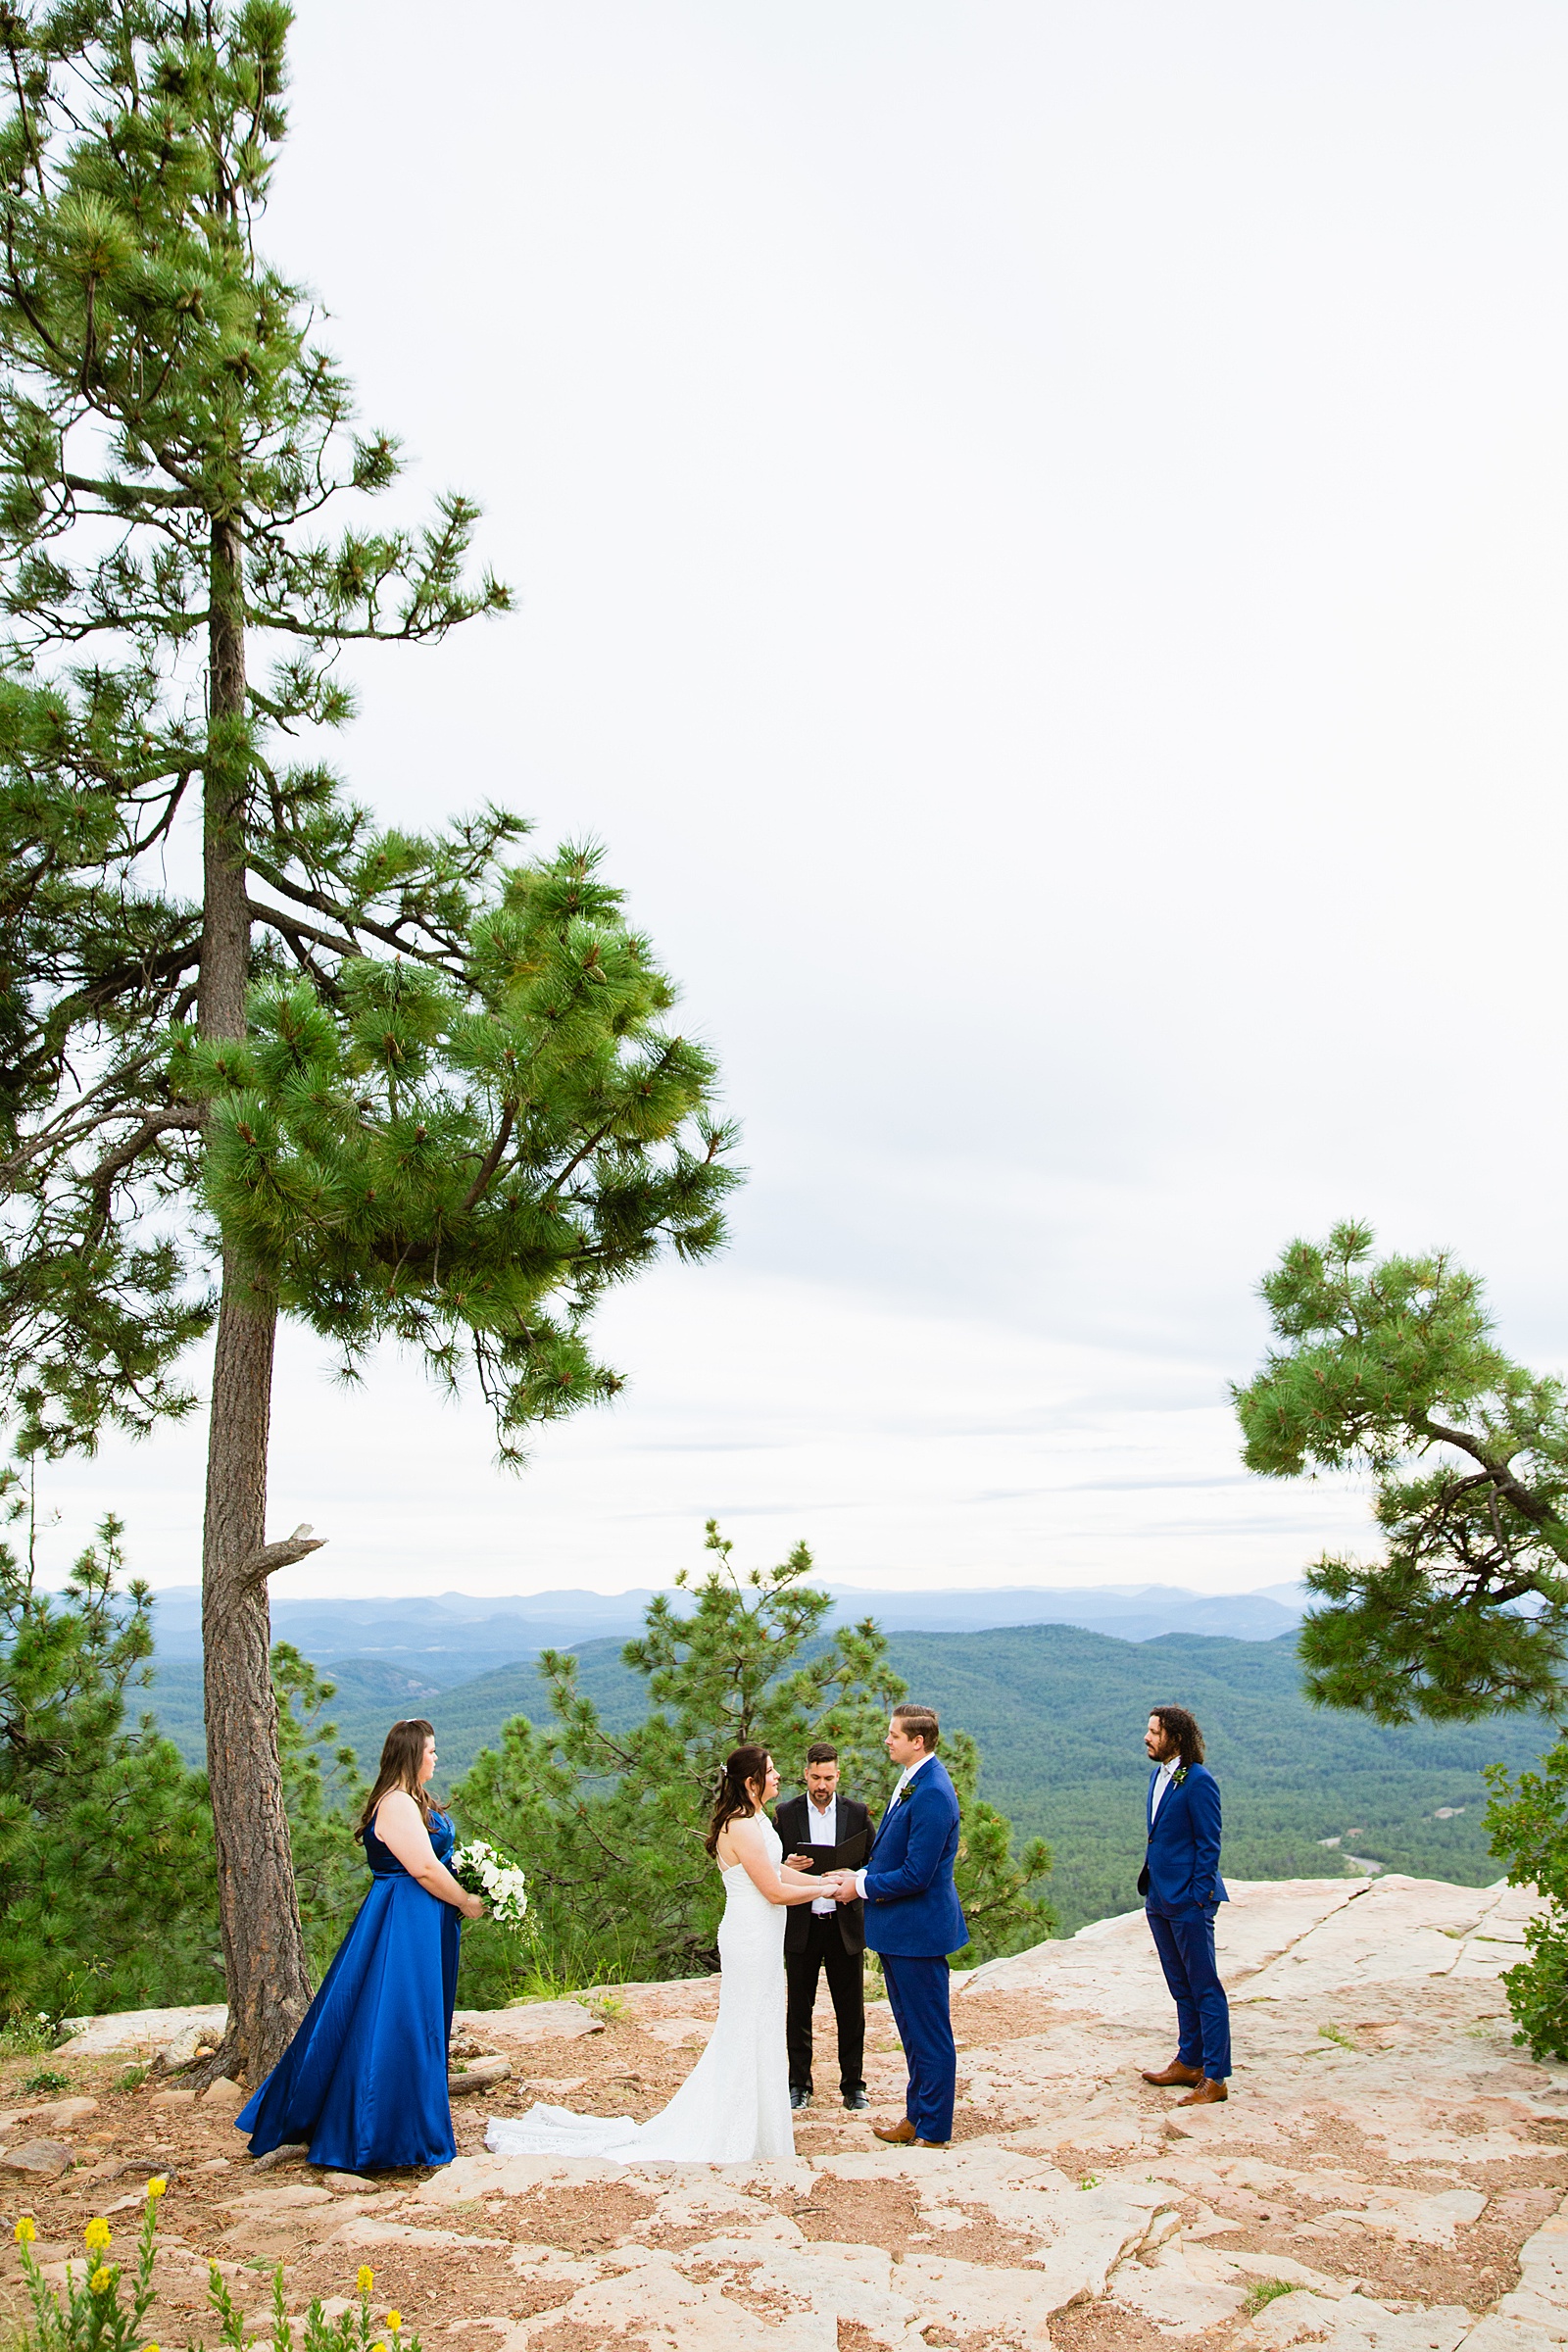 Wedding ceremony at Mogollon Rim by Arizona elopement photographer Juniper and Co Photography.